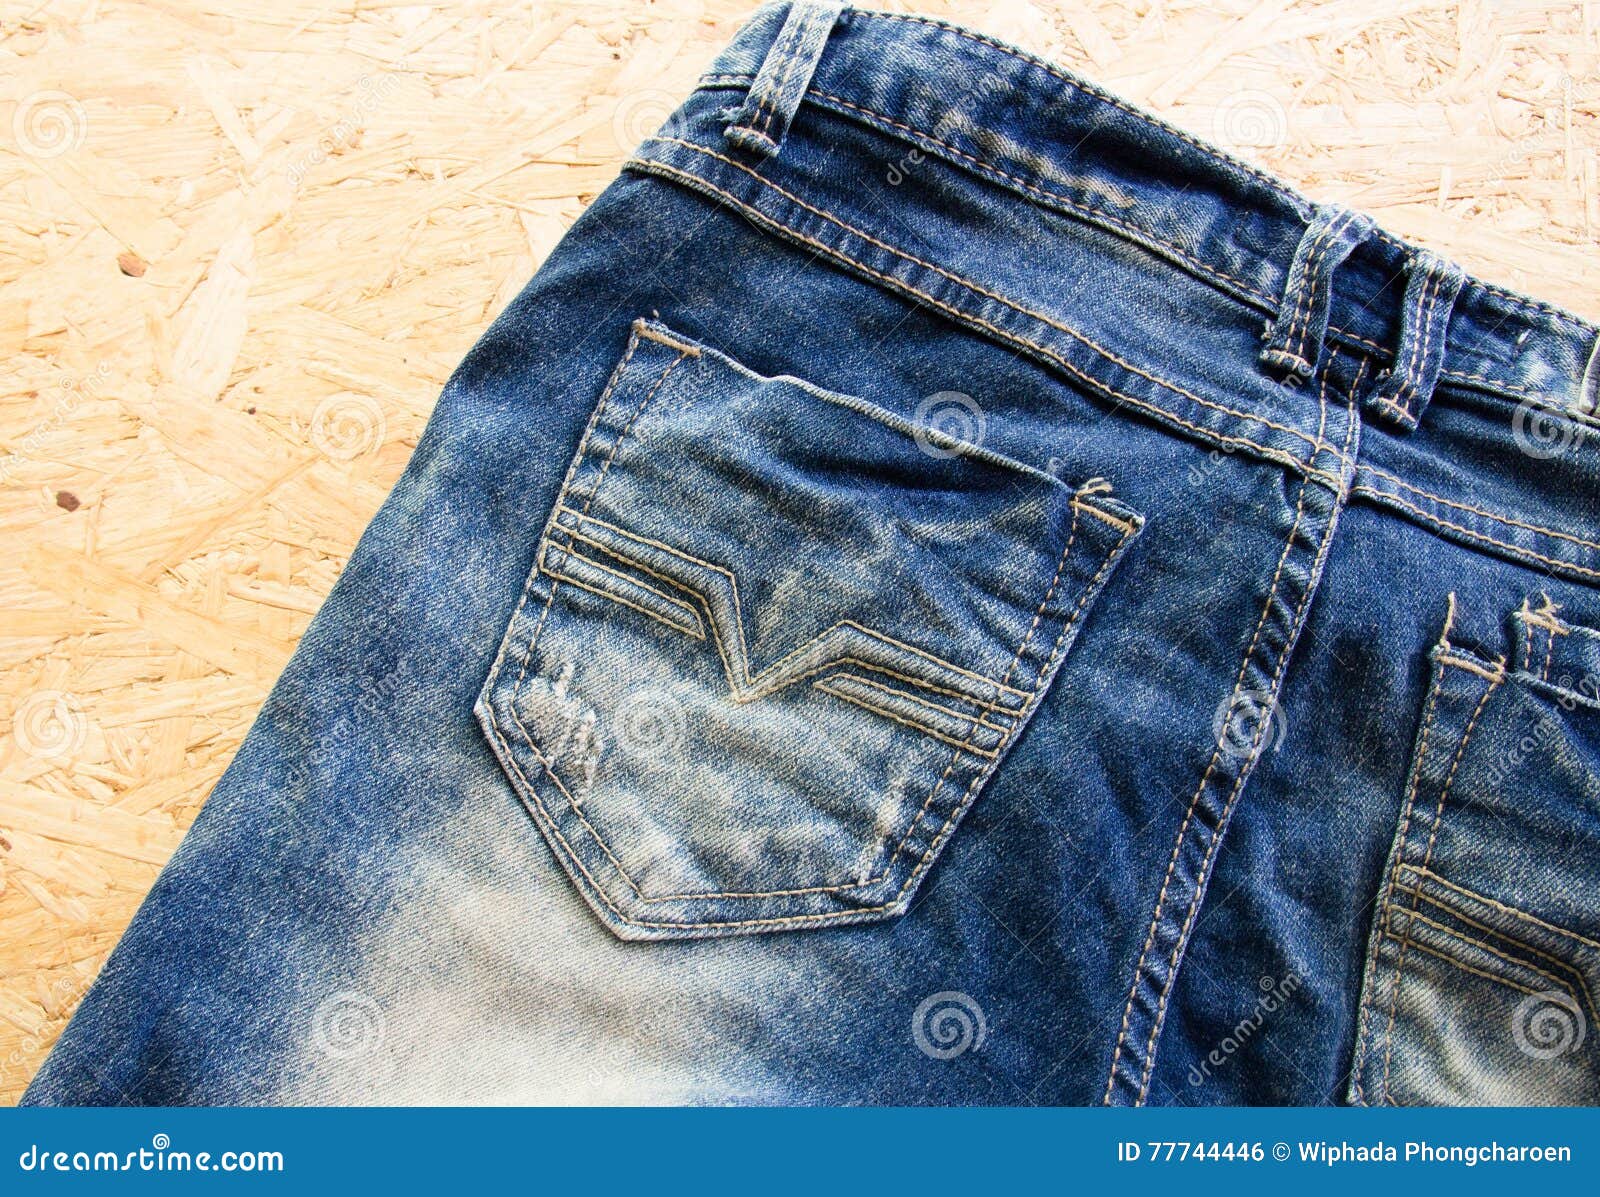 Ladies Rhinestone Denim Pants with Motorcycle Design on Pocket #4047 | eBay